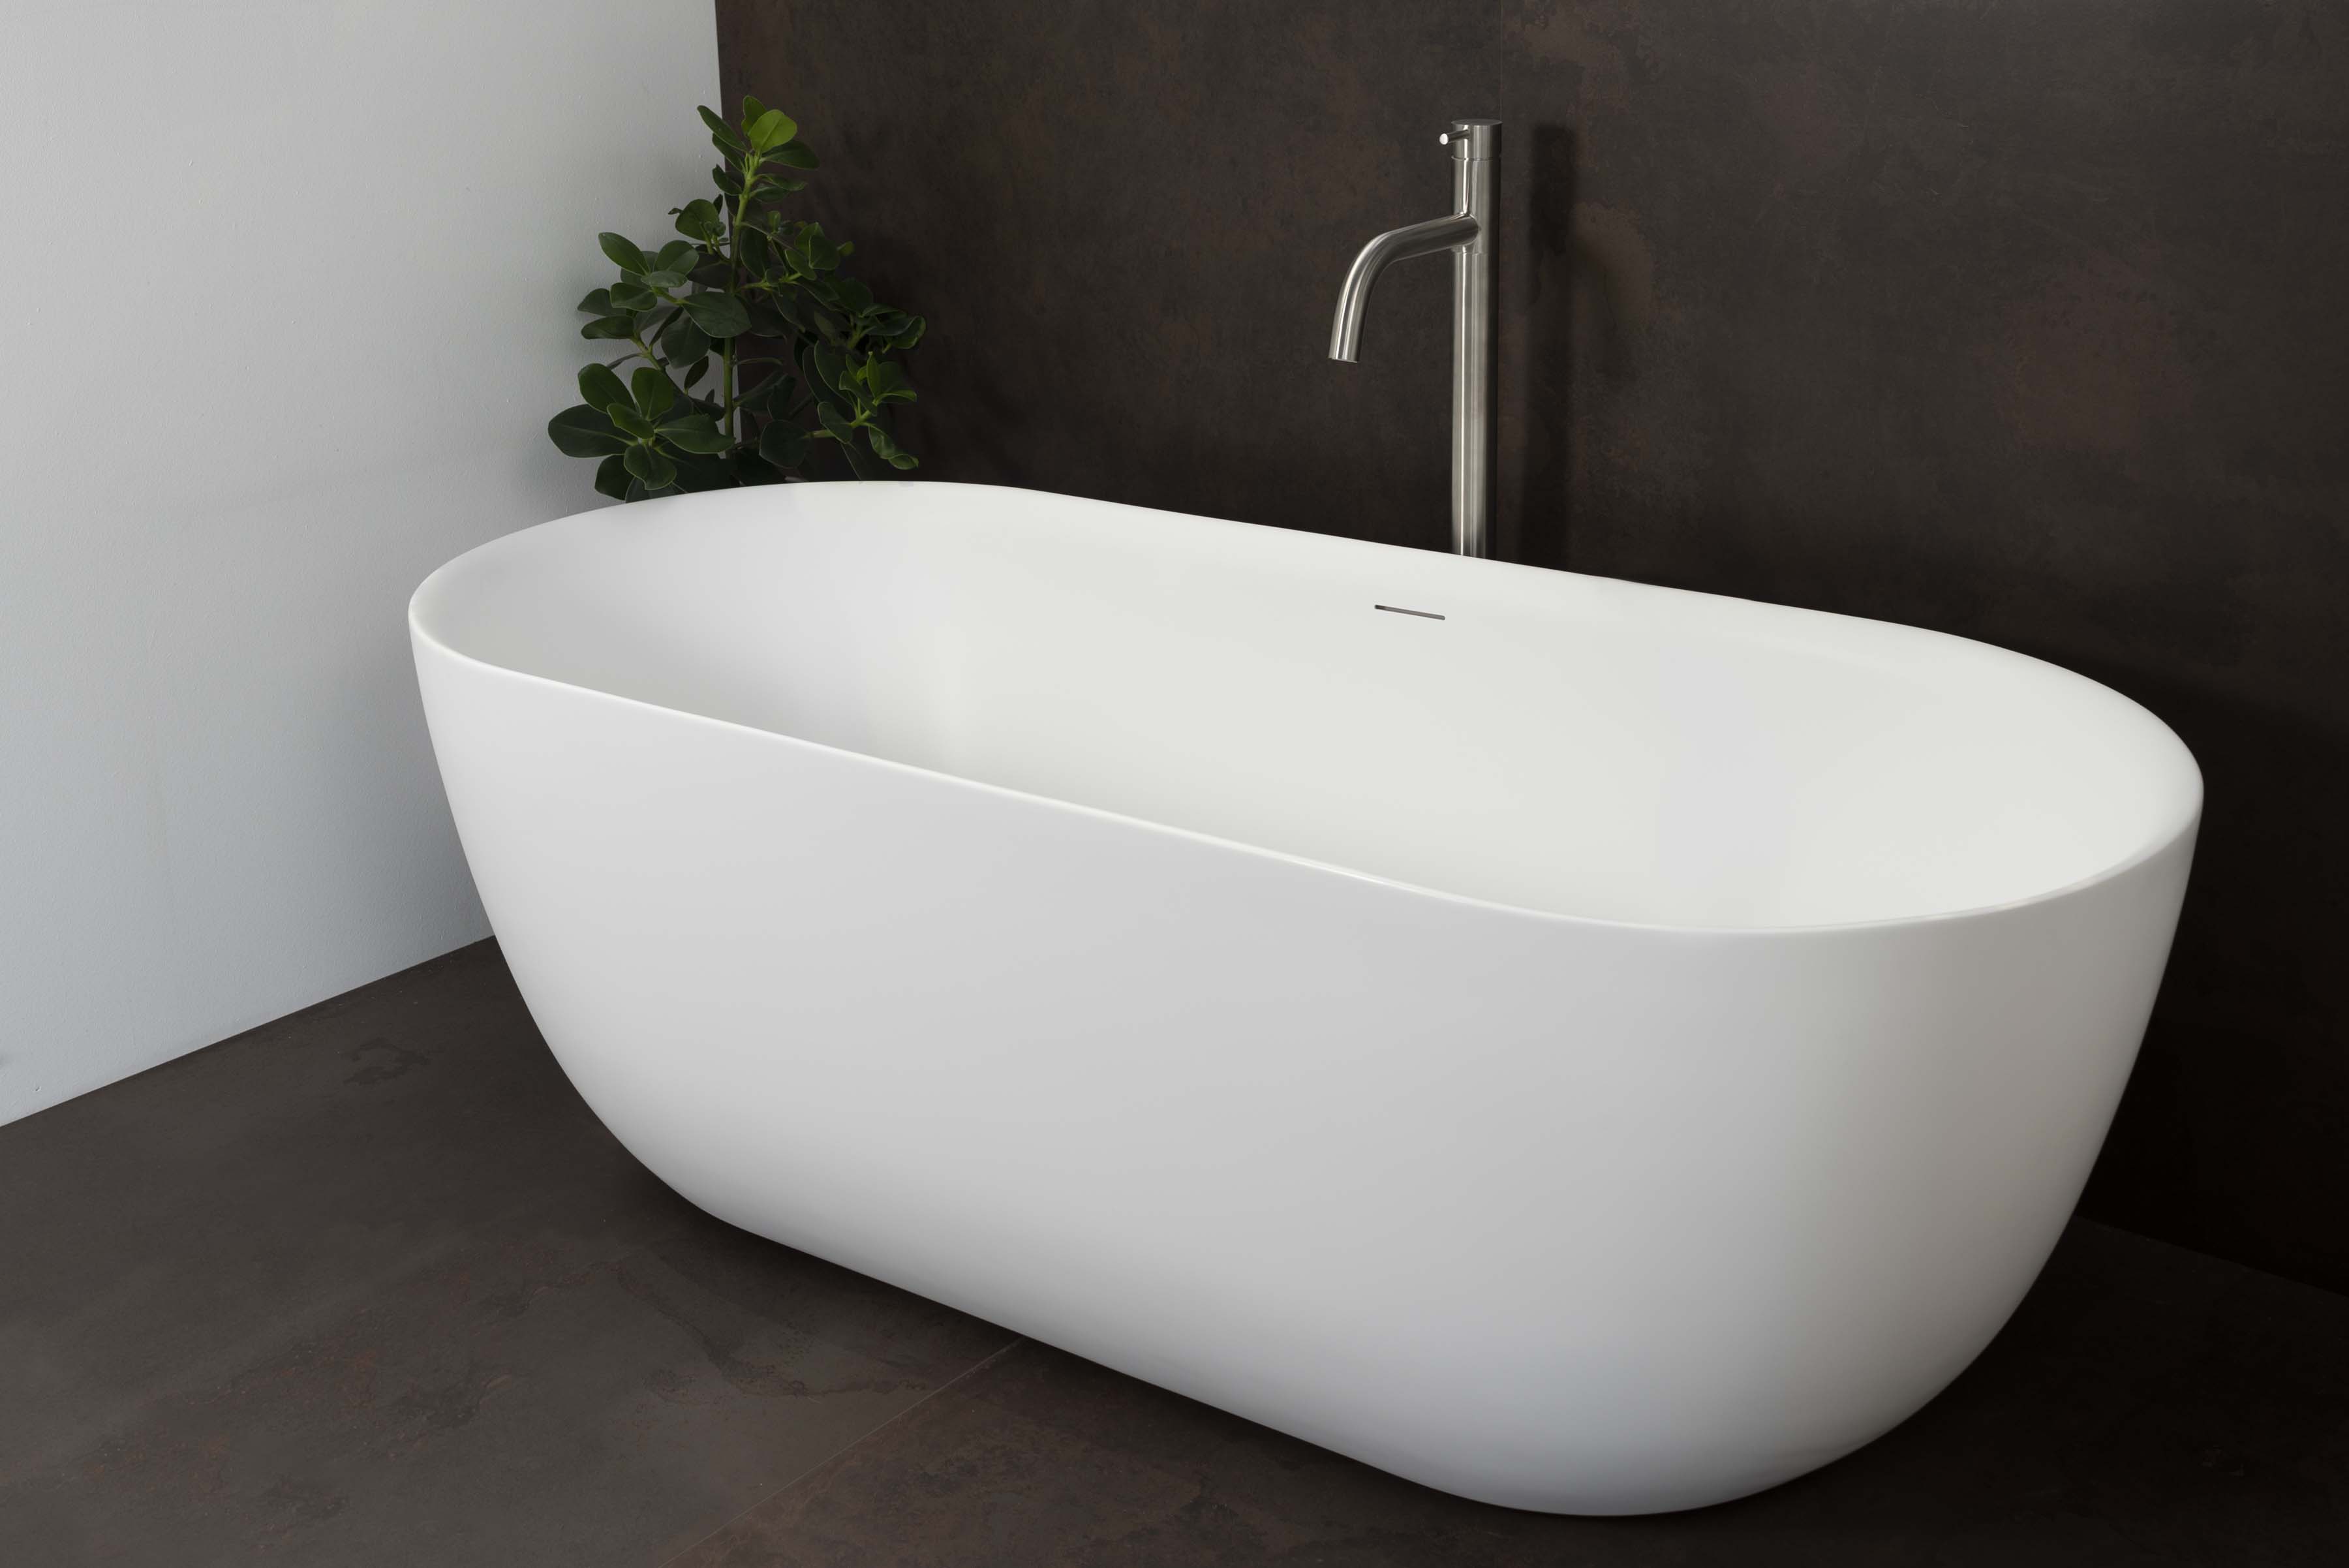 Vrijstaand bad acryl mat wit - bad - badkamer -